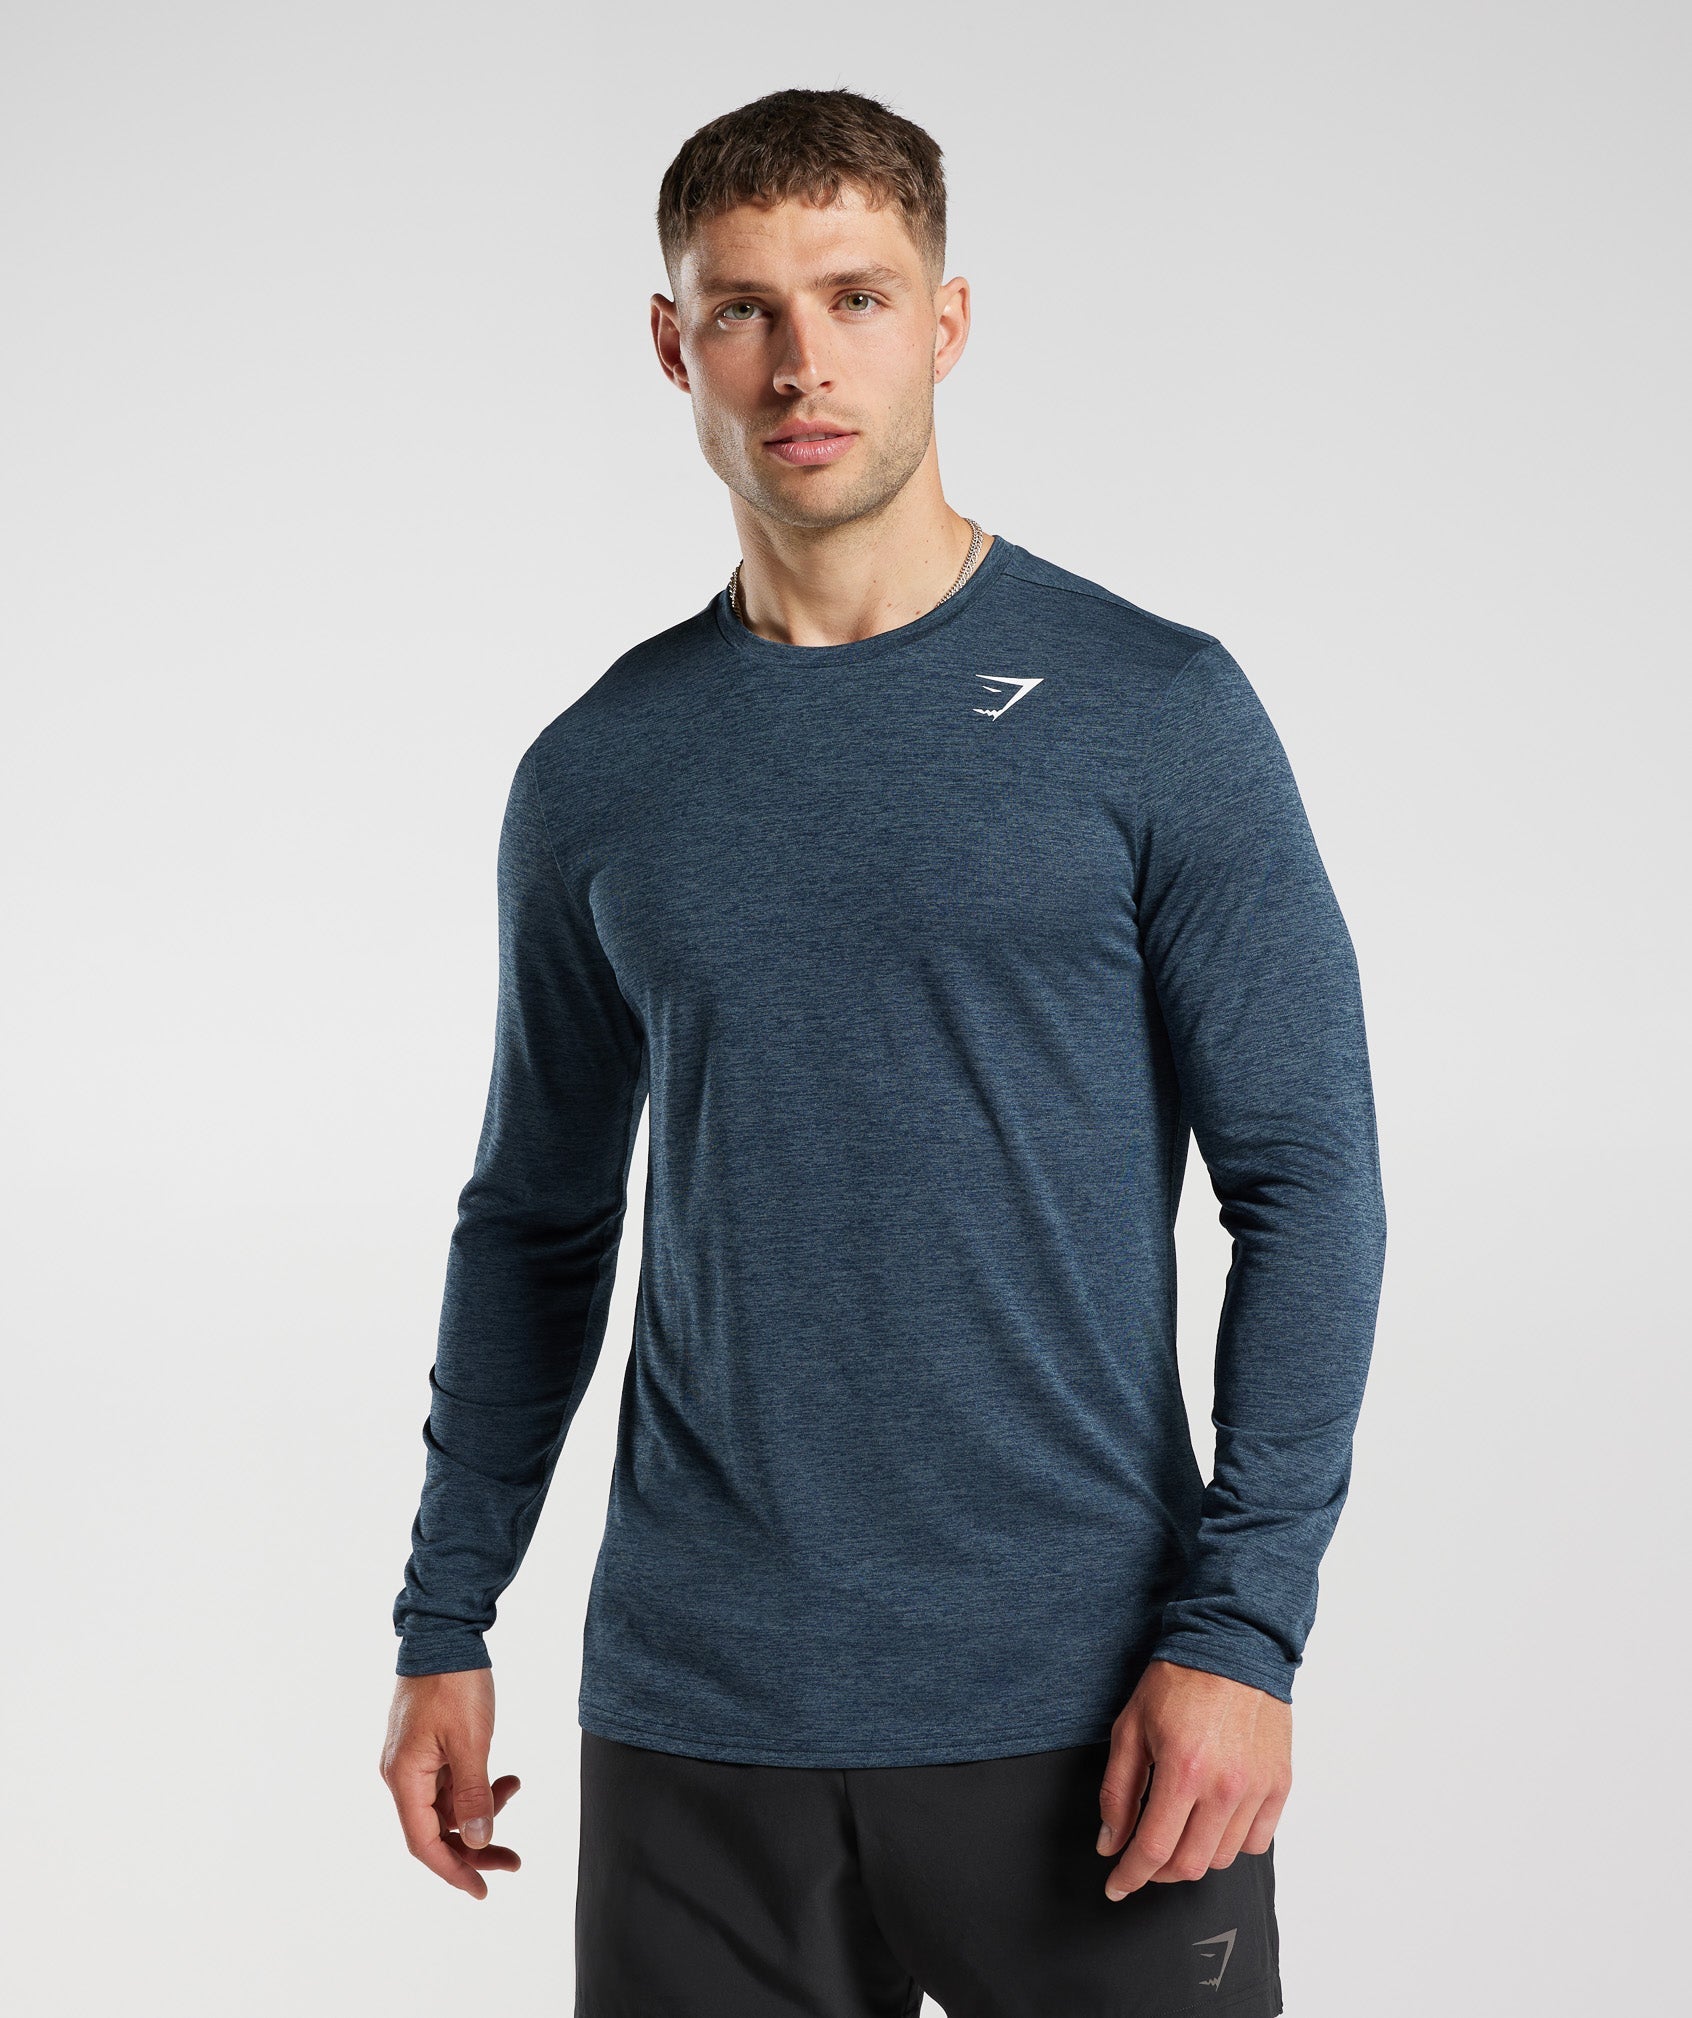 Gymshark Sport Long Sleeve T-Shirt - Navy/Black Marl